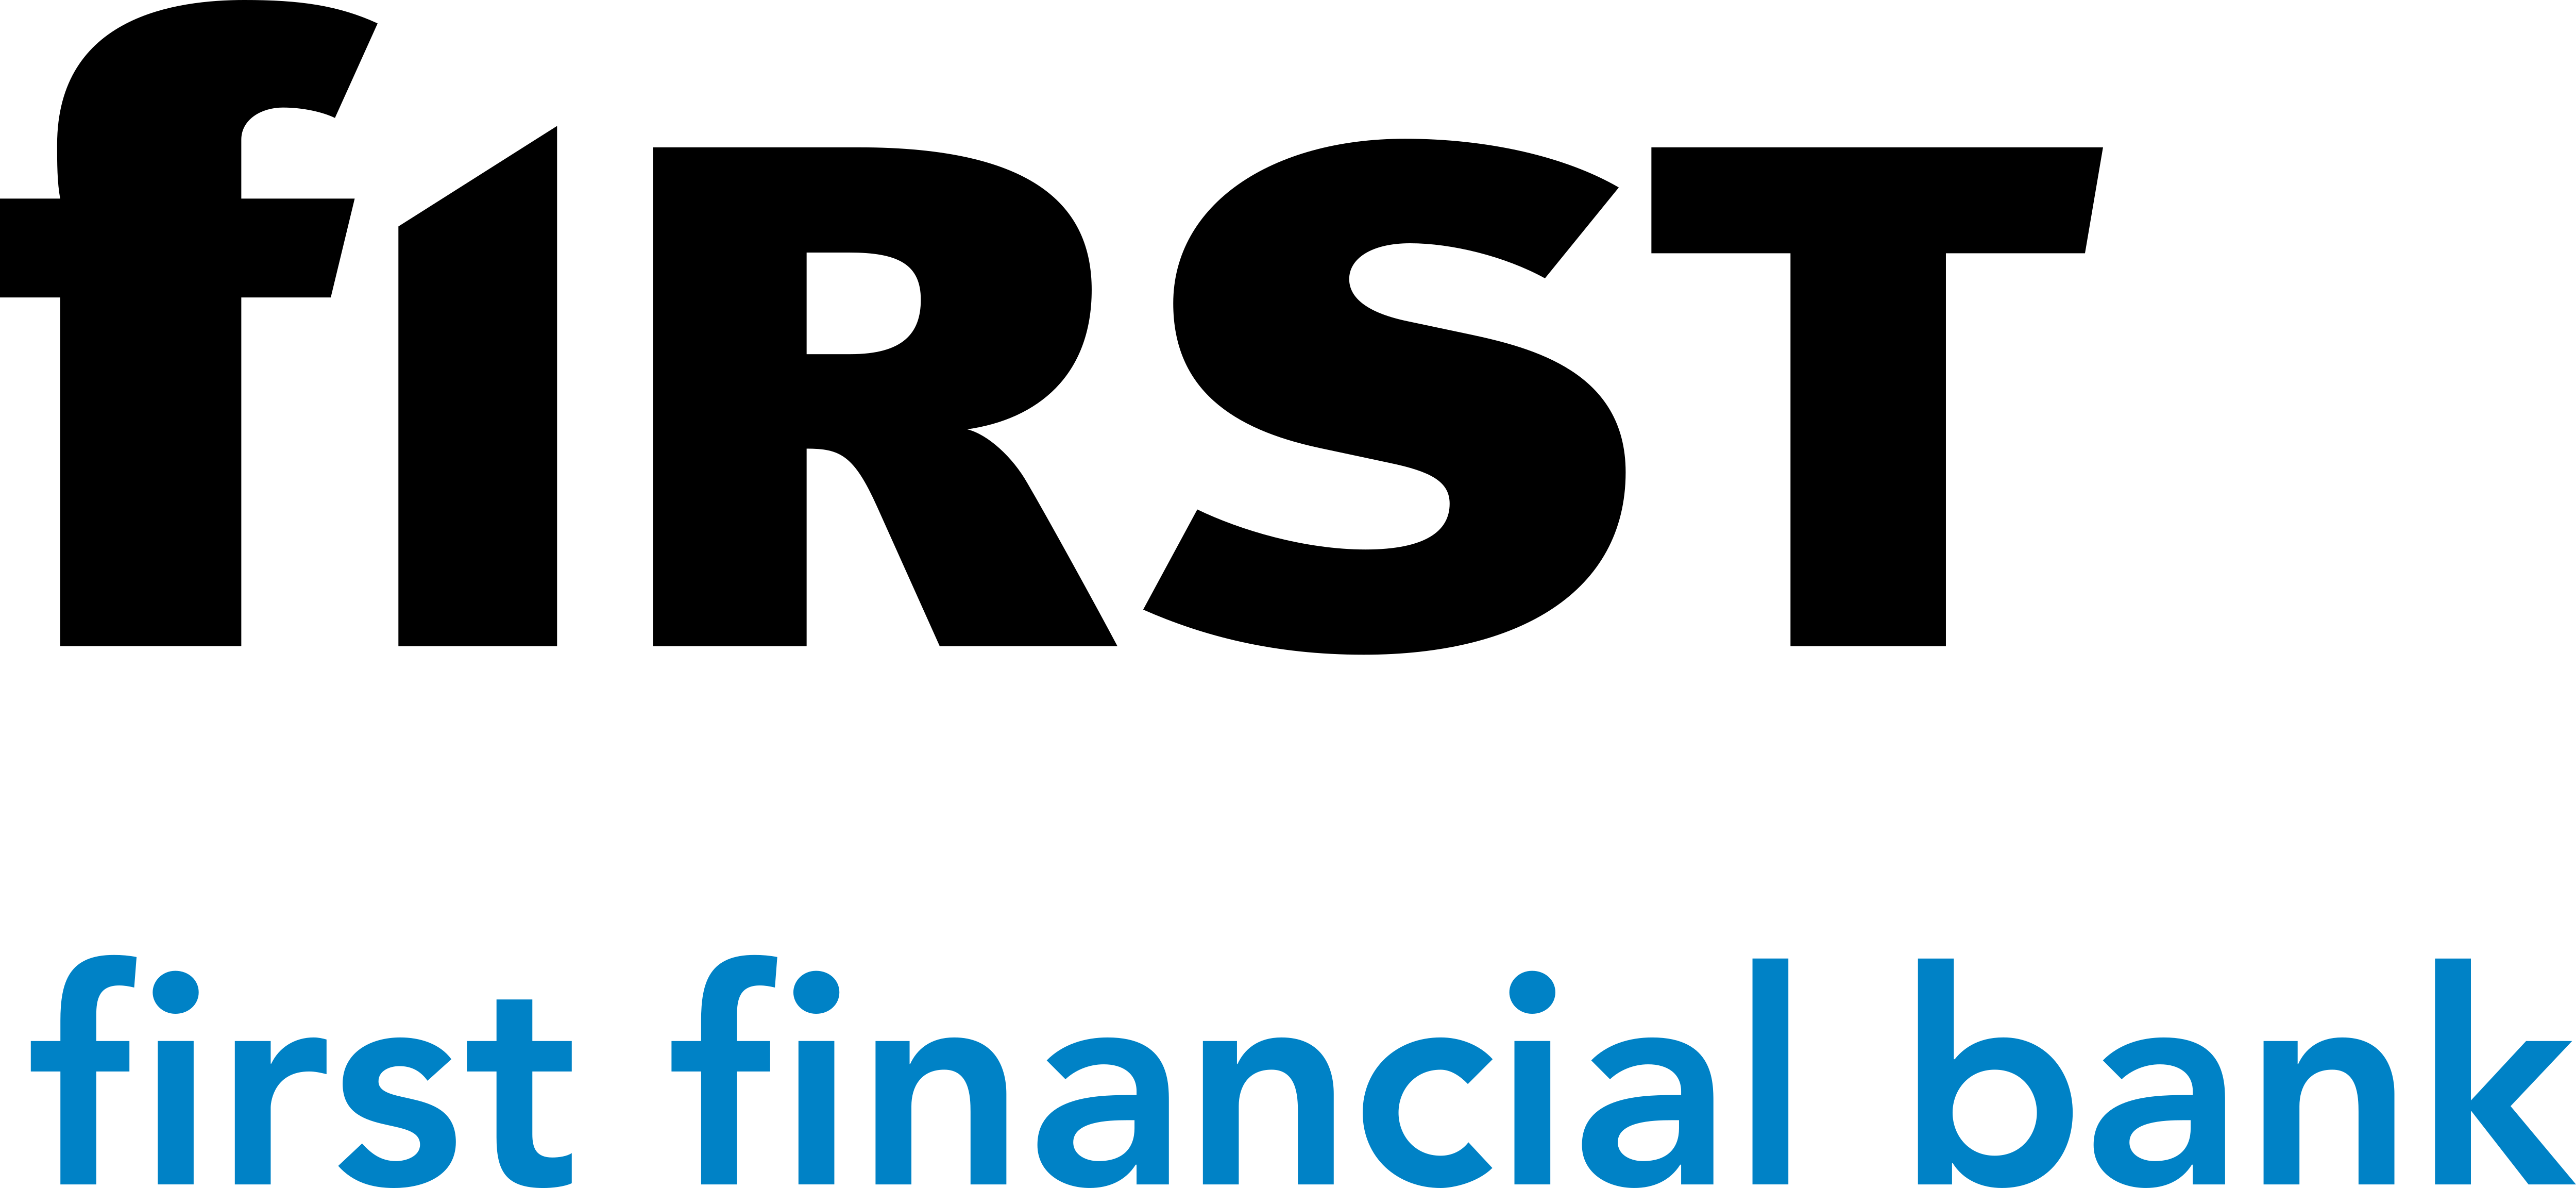 First Financial Bank Logos Download